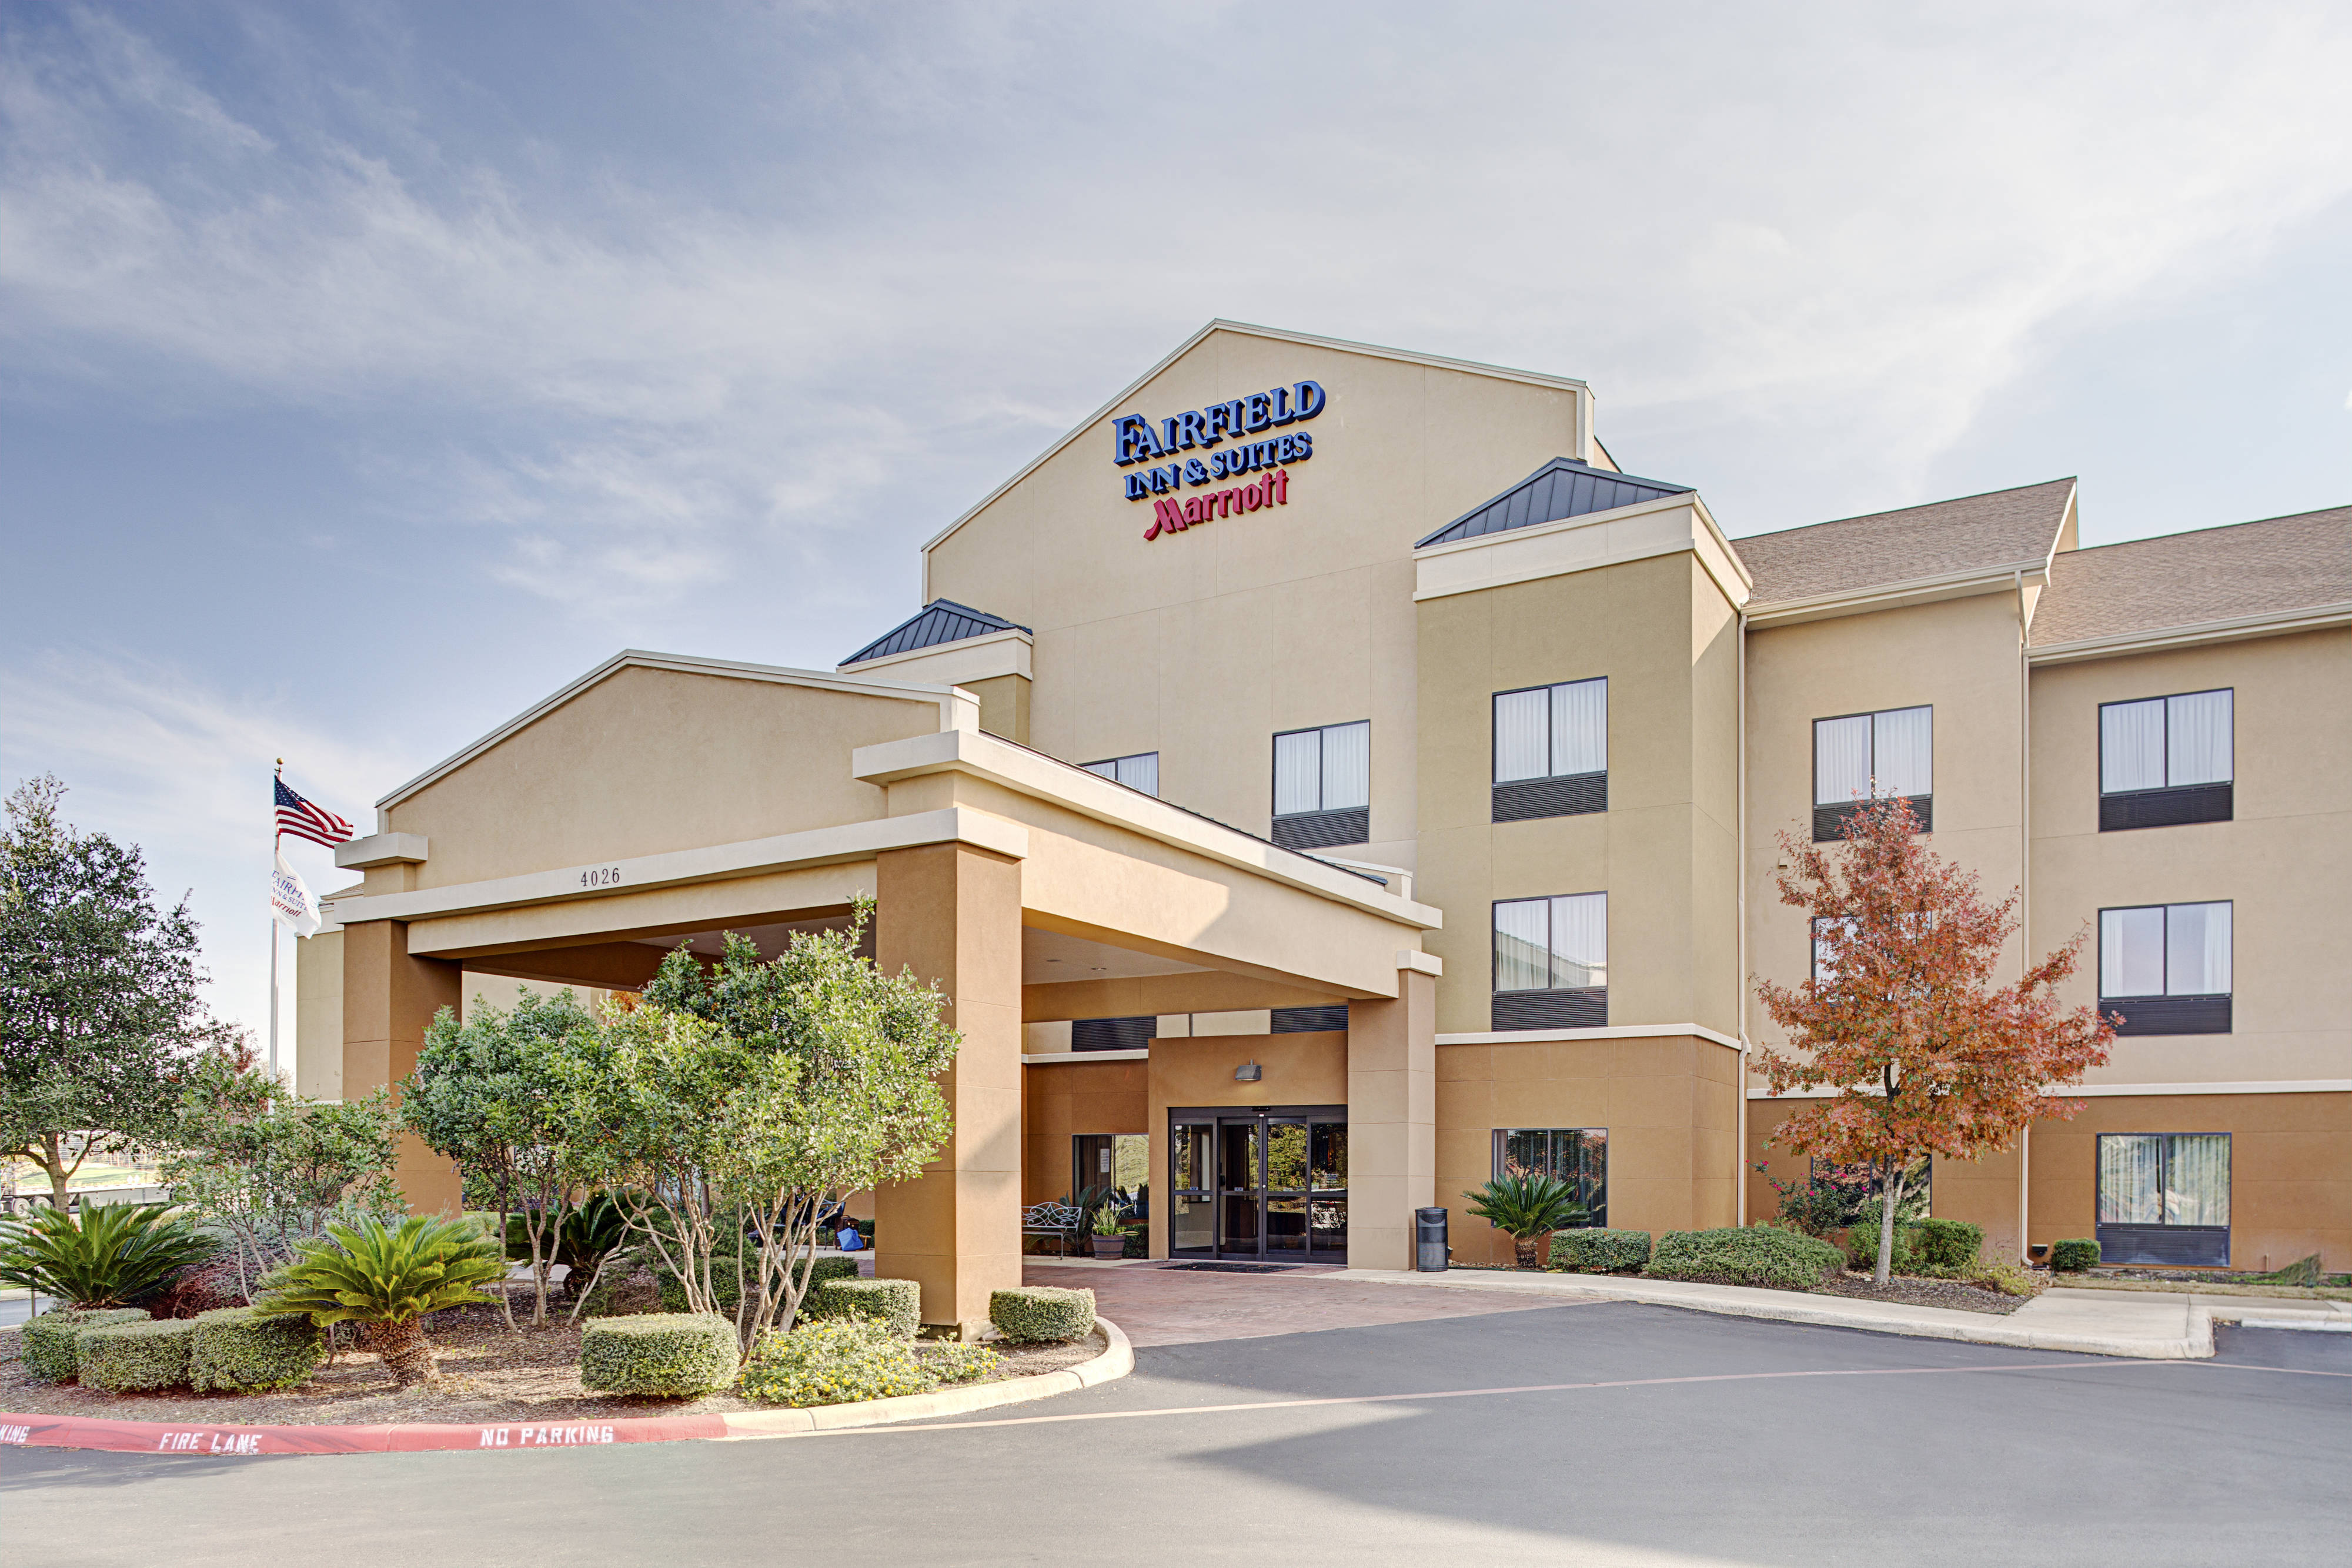 Photo of Fairfield Inn & Suites by Marriott San Antonio SeaWorld/Westover Hills, San Antonio, TX